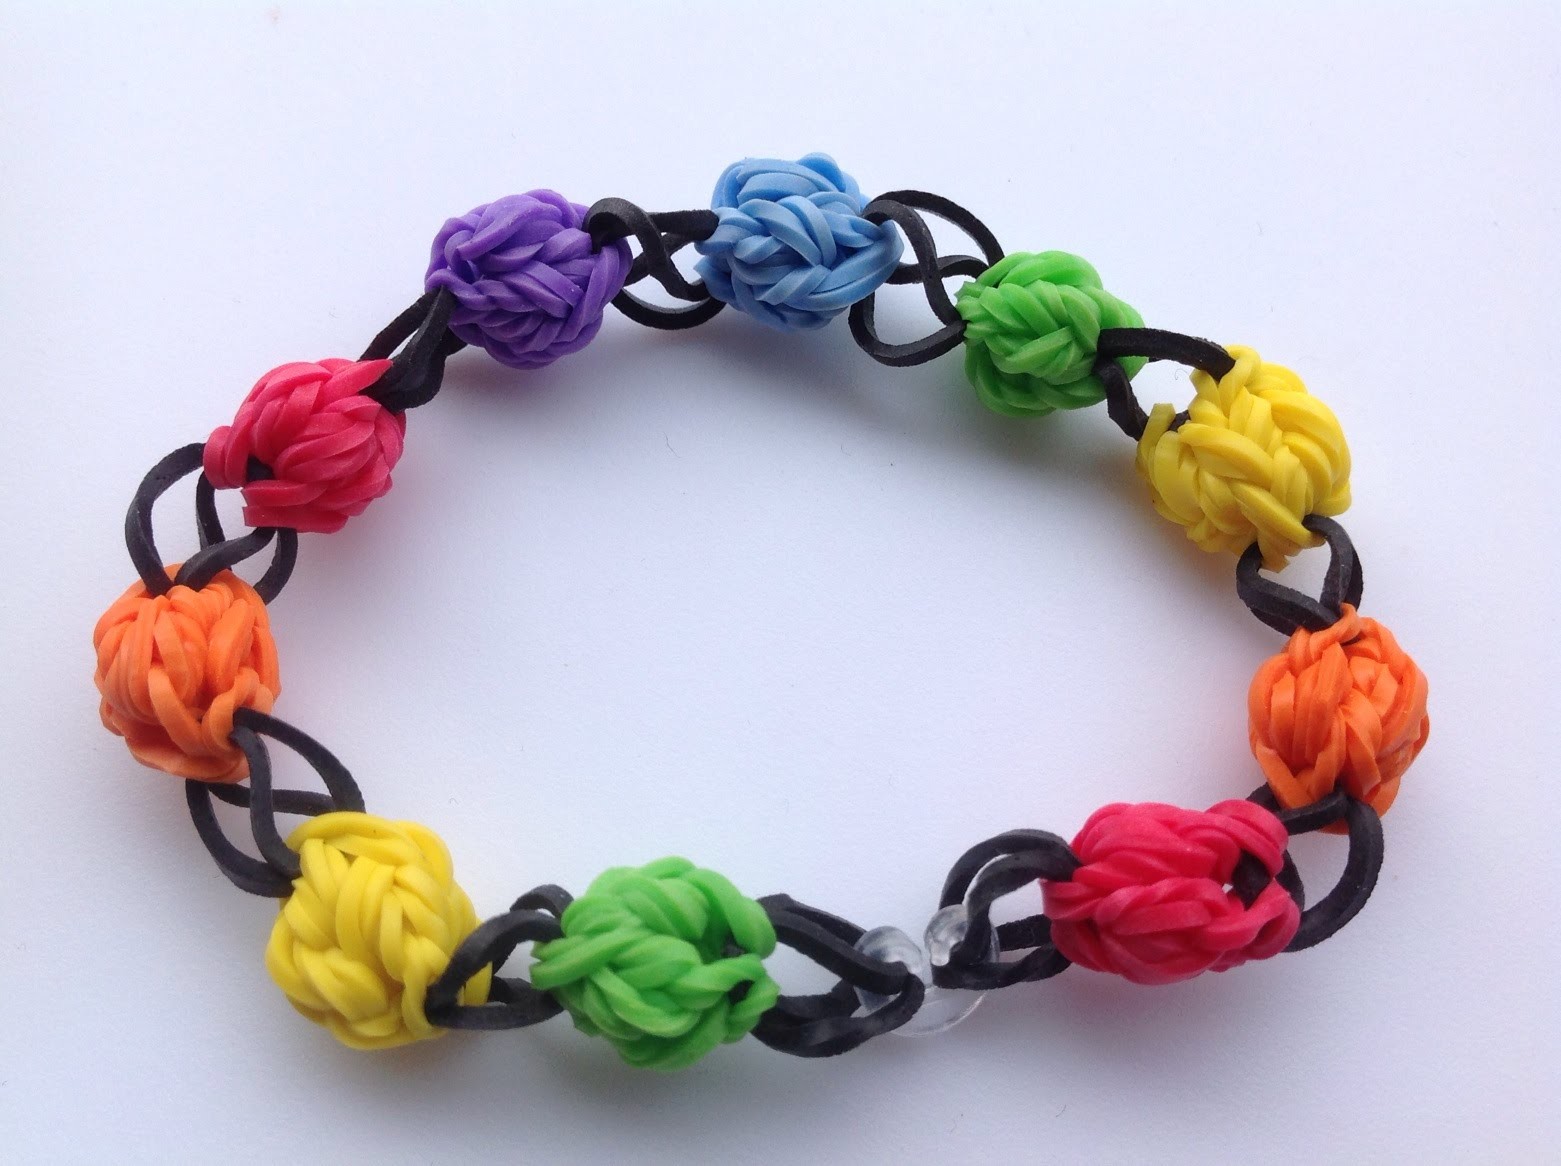 Rainbow loom Nederlands, gumball chain, armband, bracelet, original design